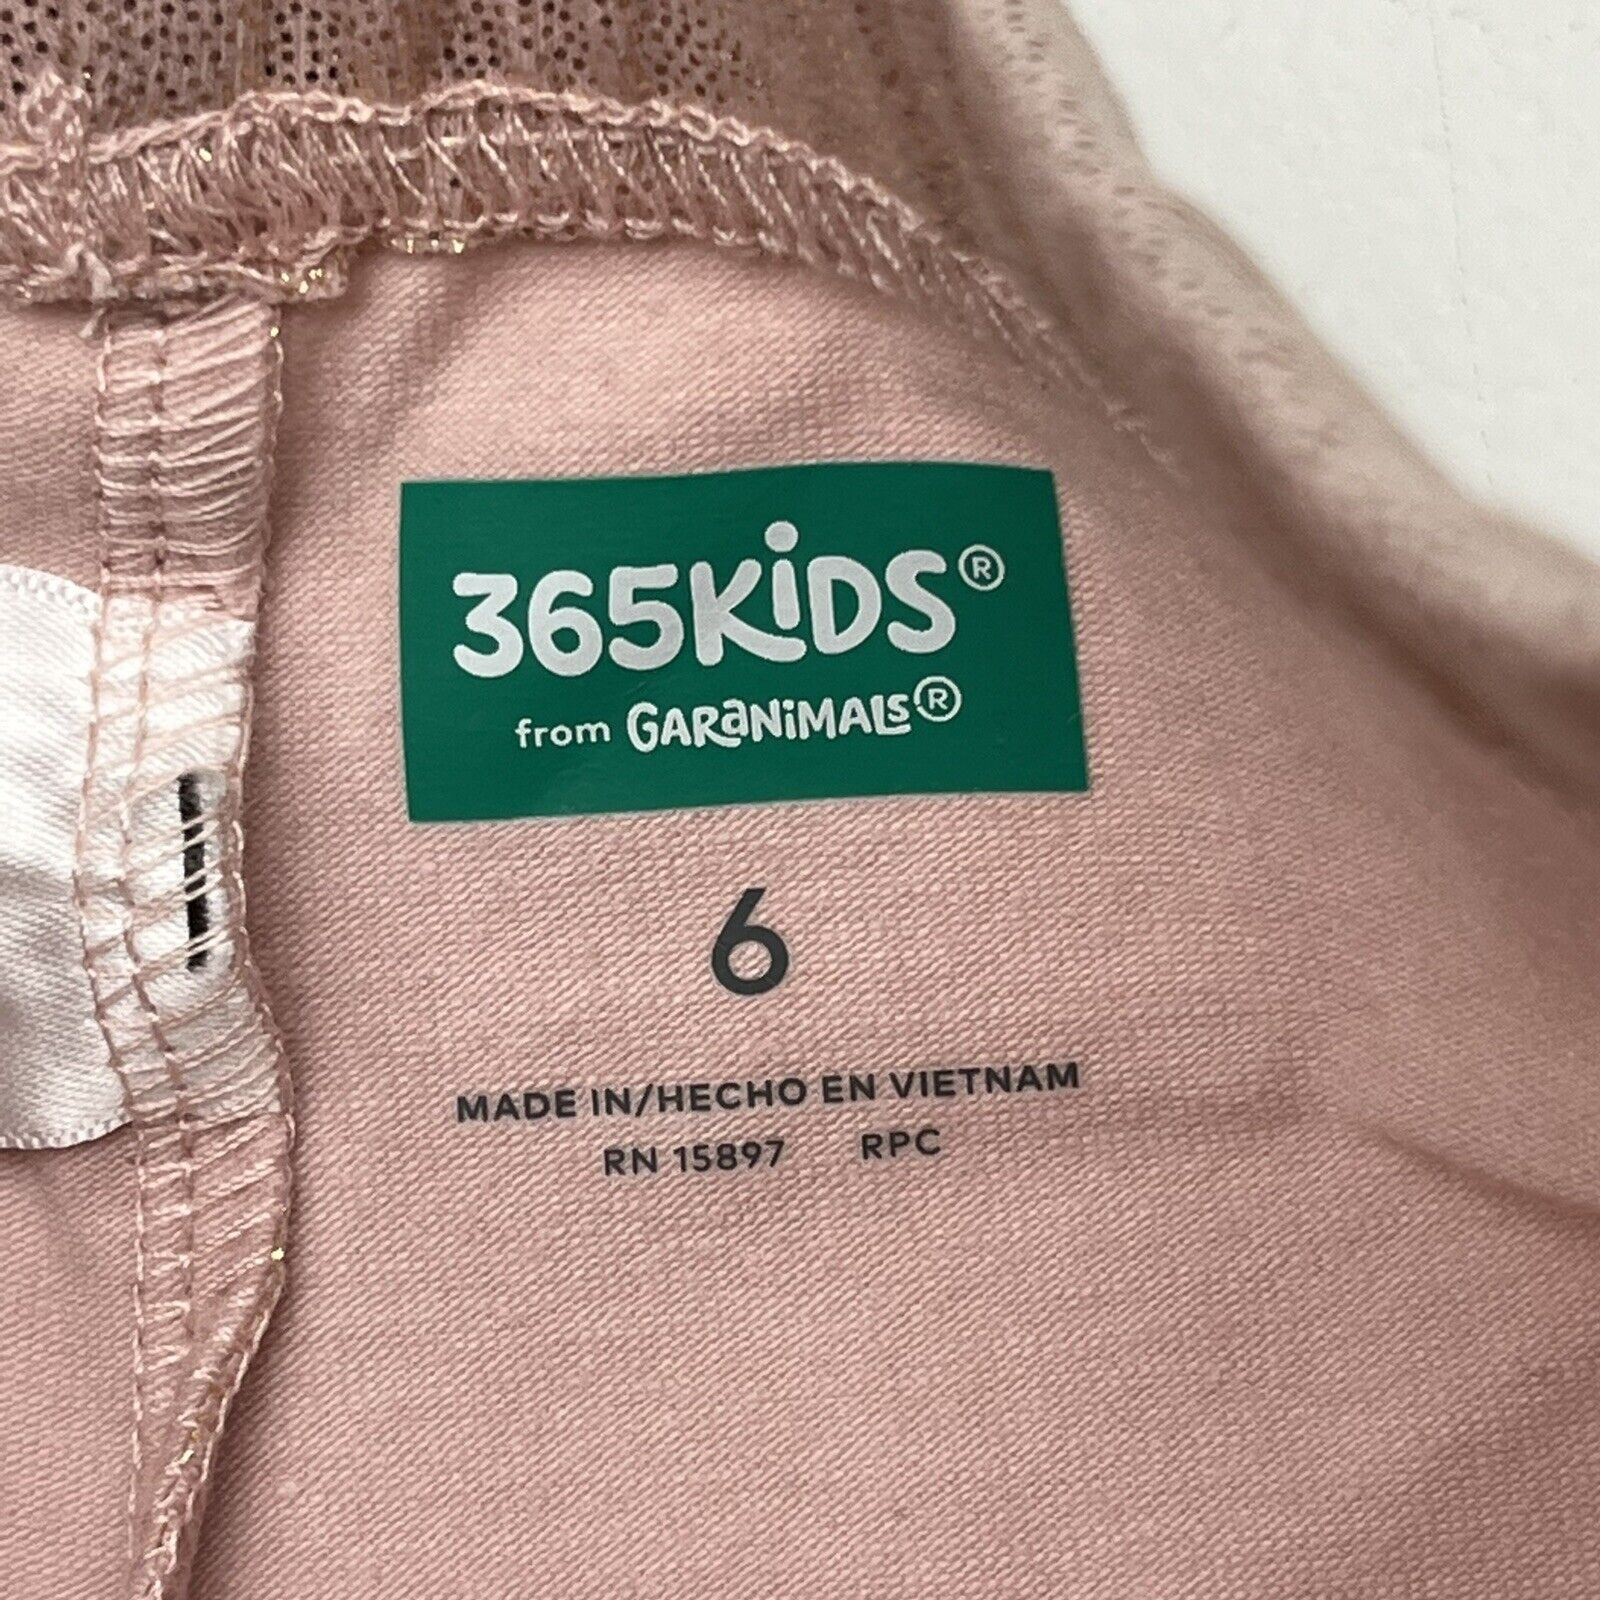 365 Kids Garanimals Pink Matalic Leggings Girls Size 6 NEW